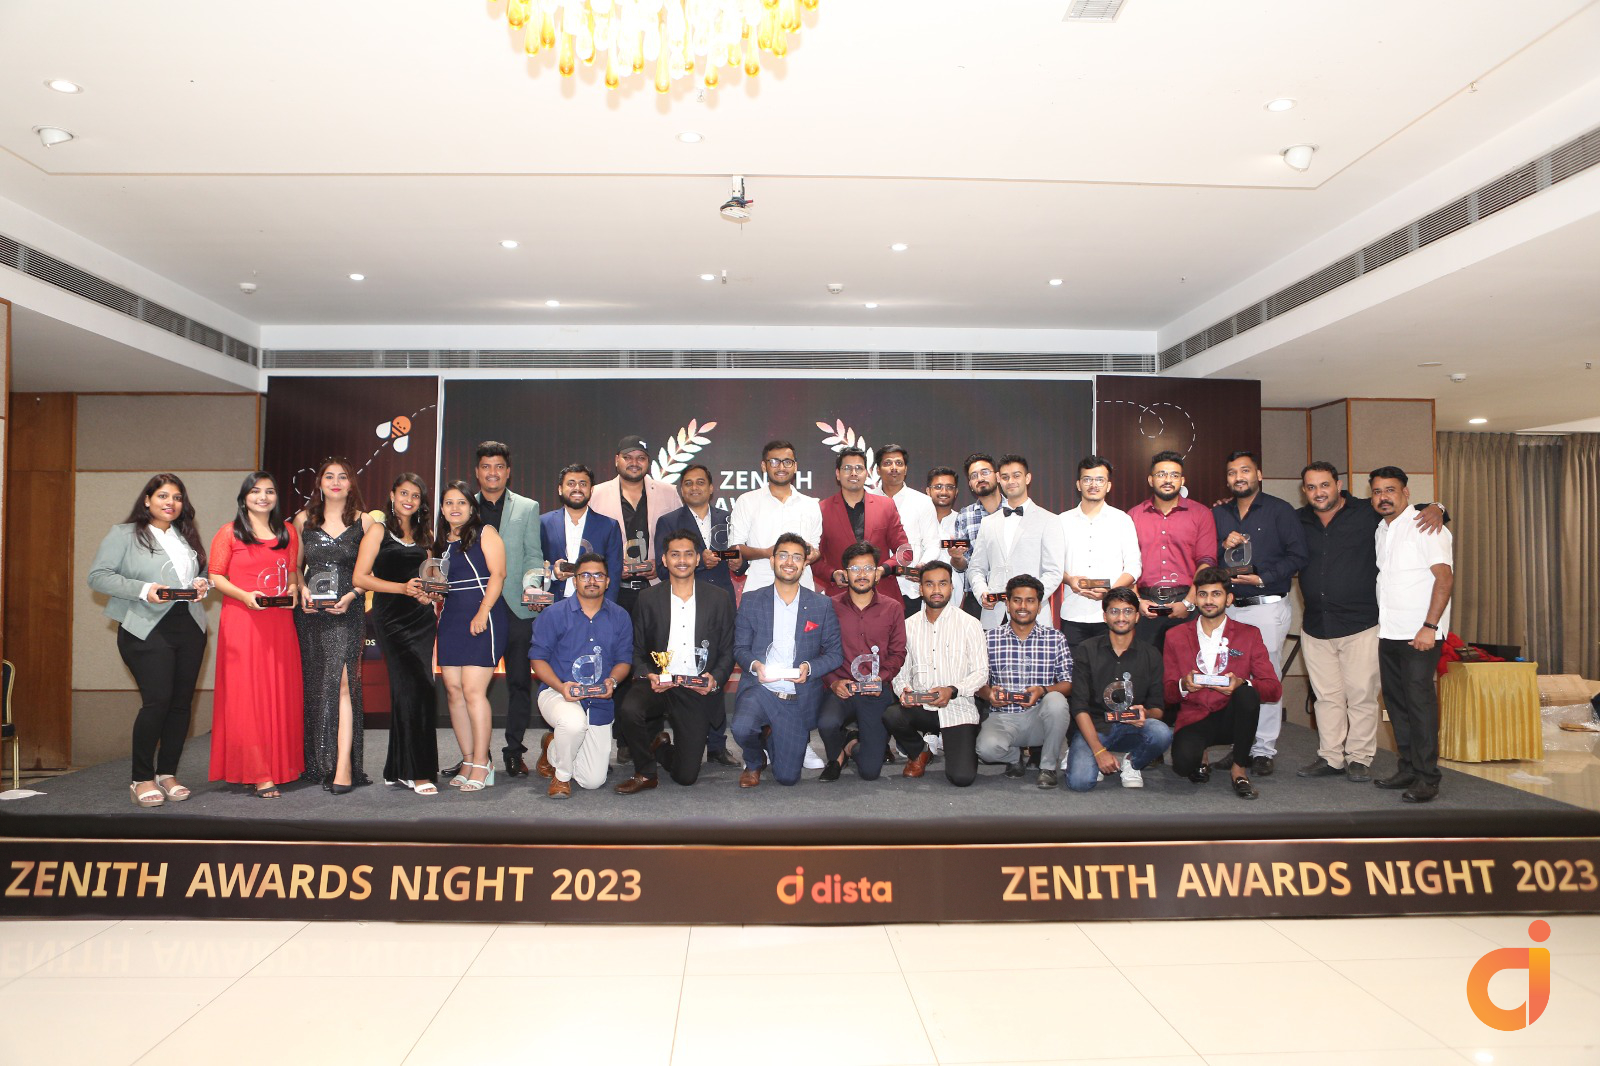 Dista Zenith Awards 2023: DISTANs Celebrate a Night of Glitz, Awards, and Success